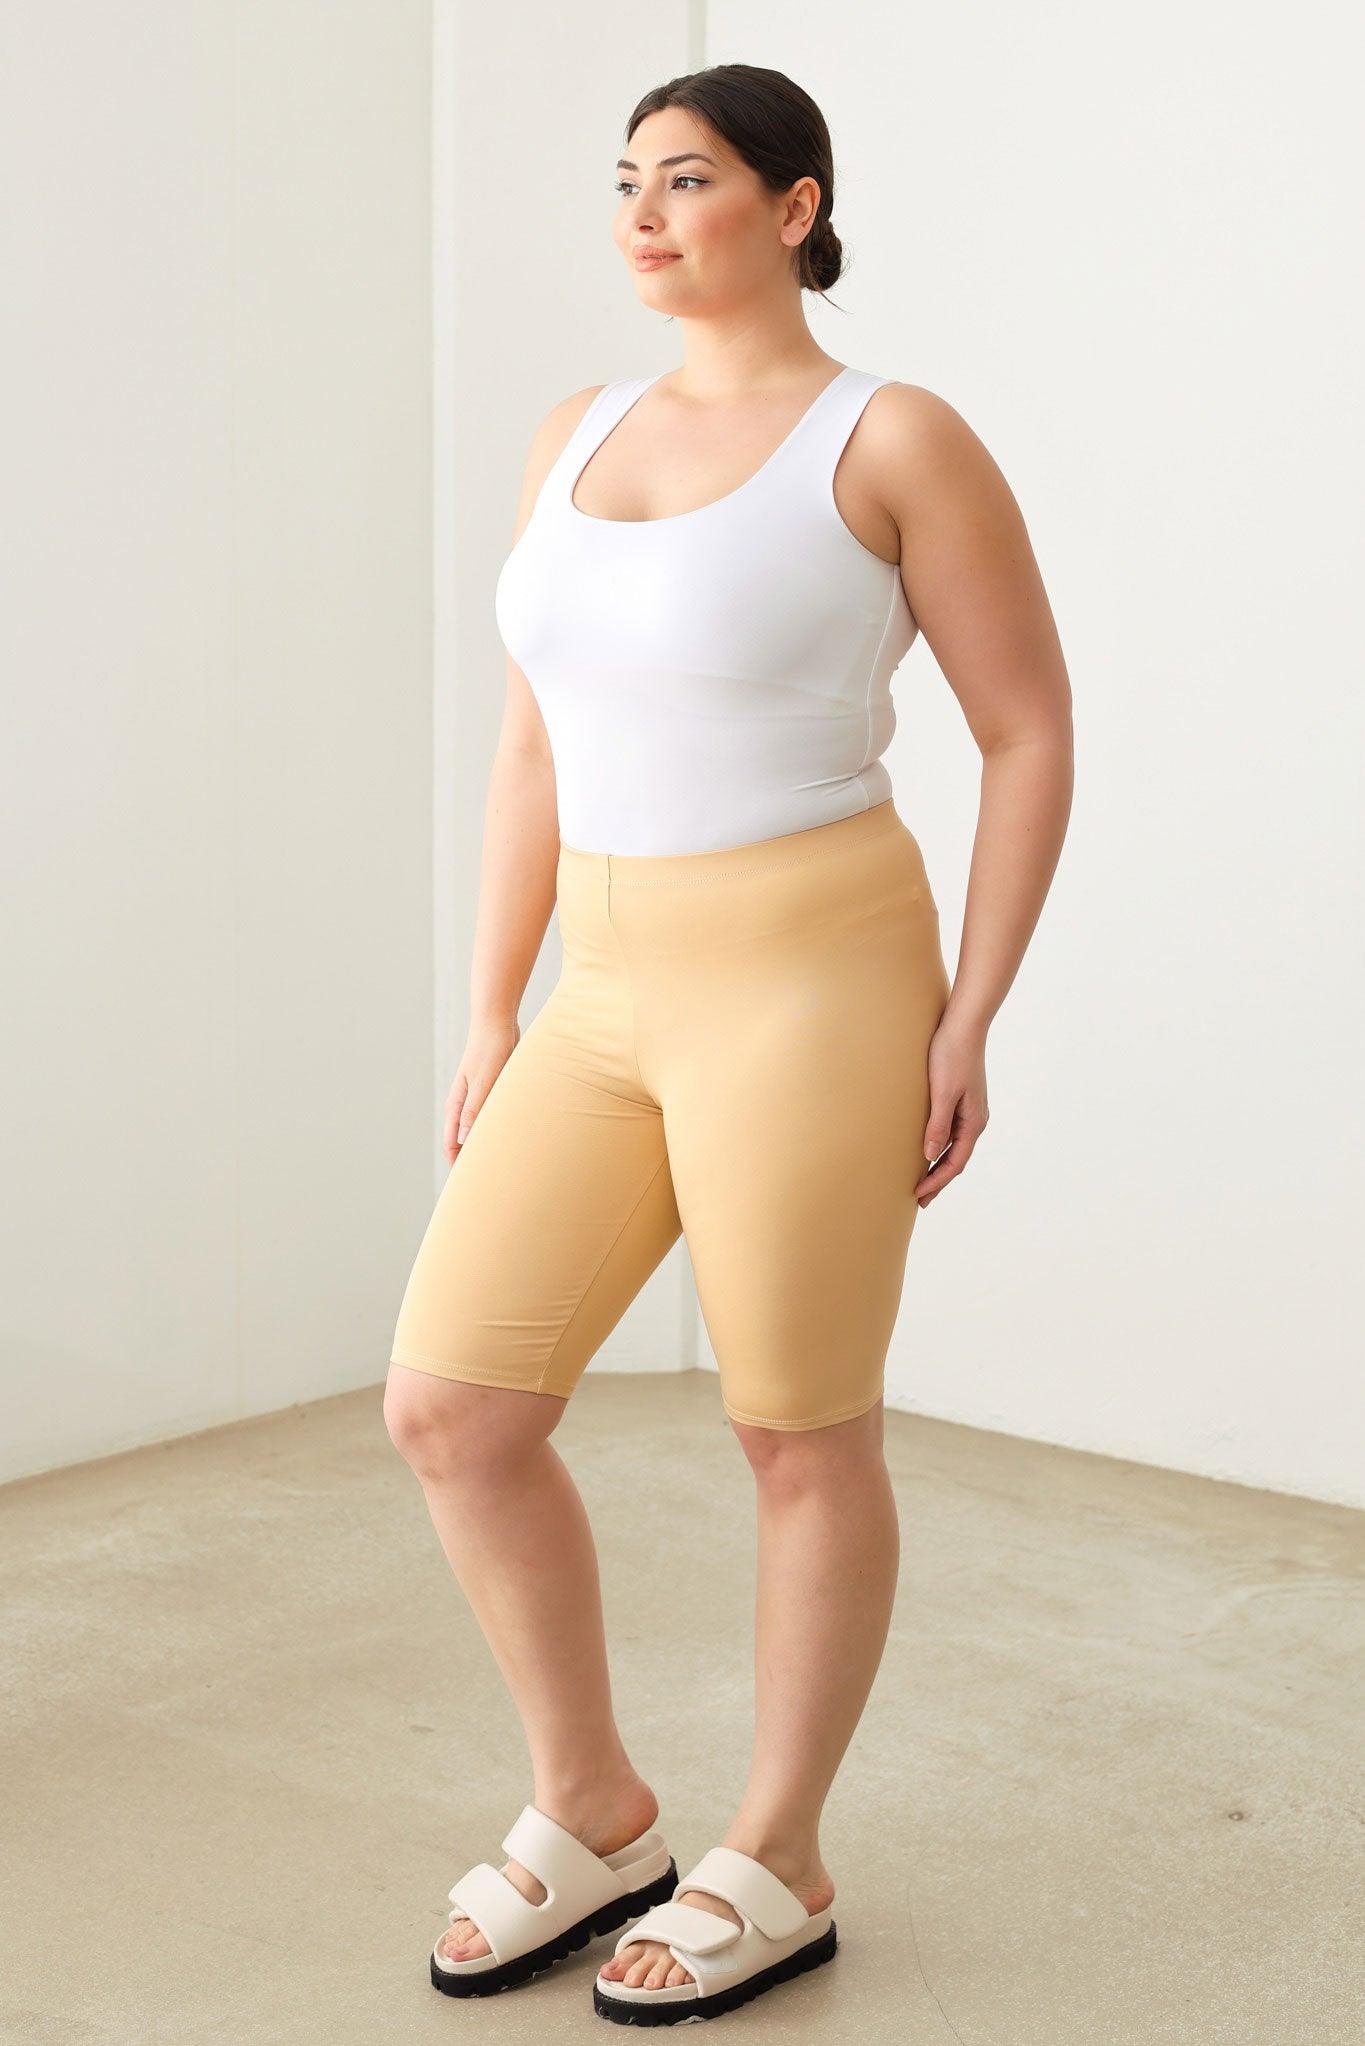 Plus Size Knee Length Yoga Shorts - Tasha Apparel Wholesale